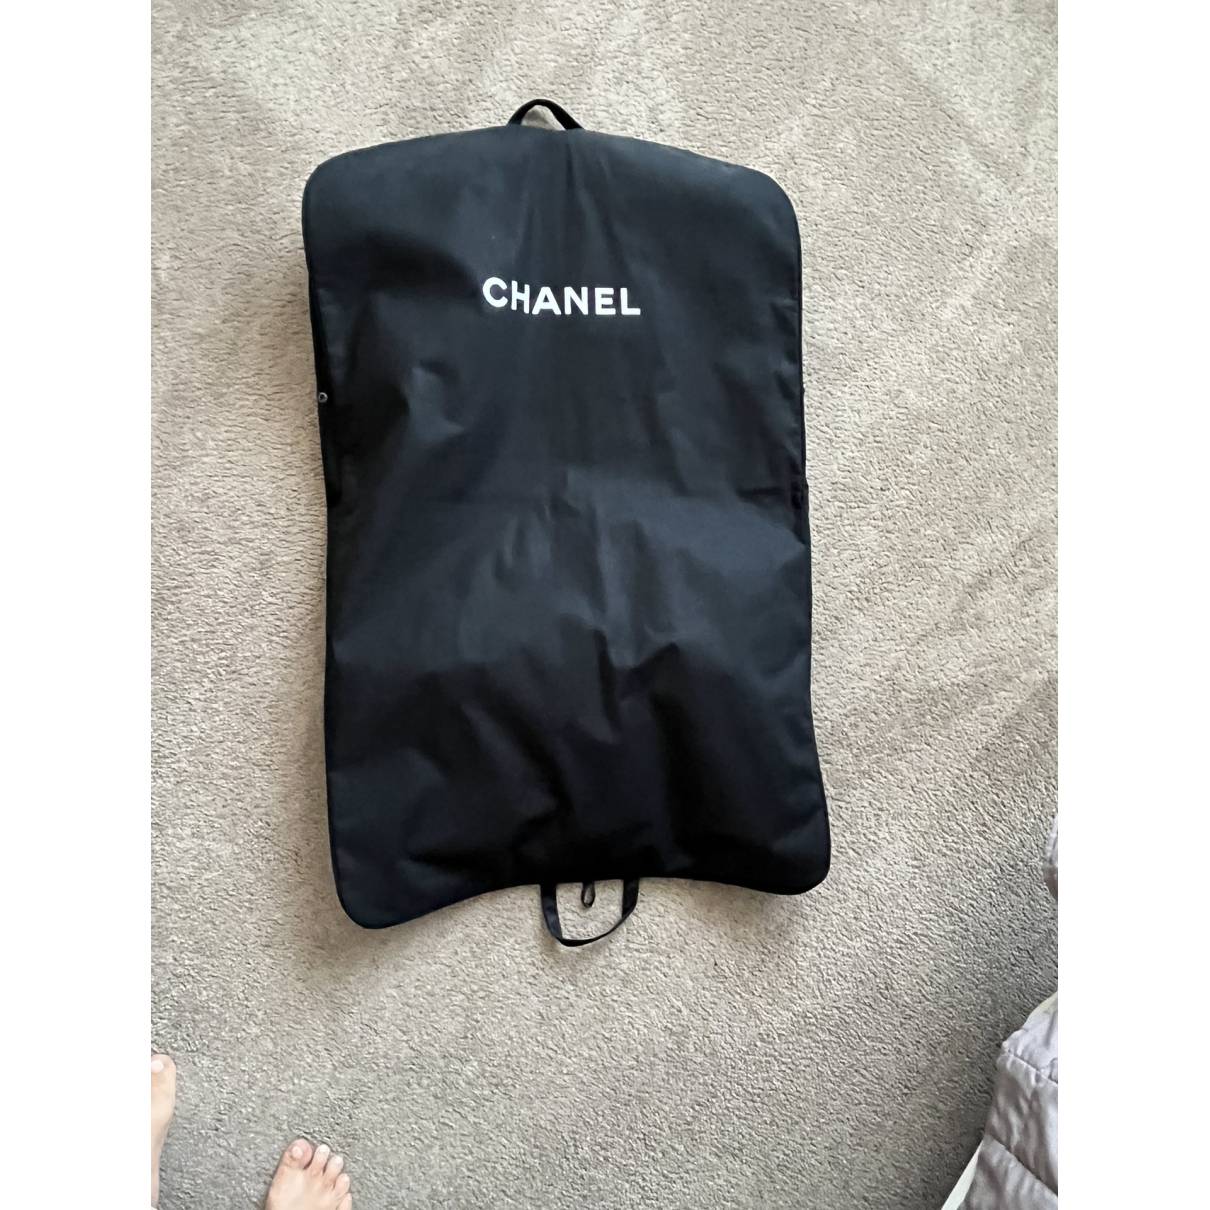 chanel iphone bag